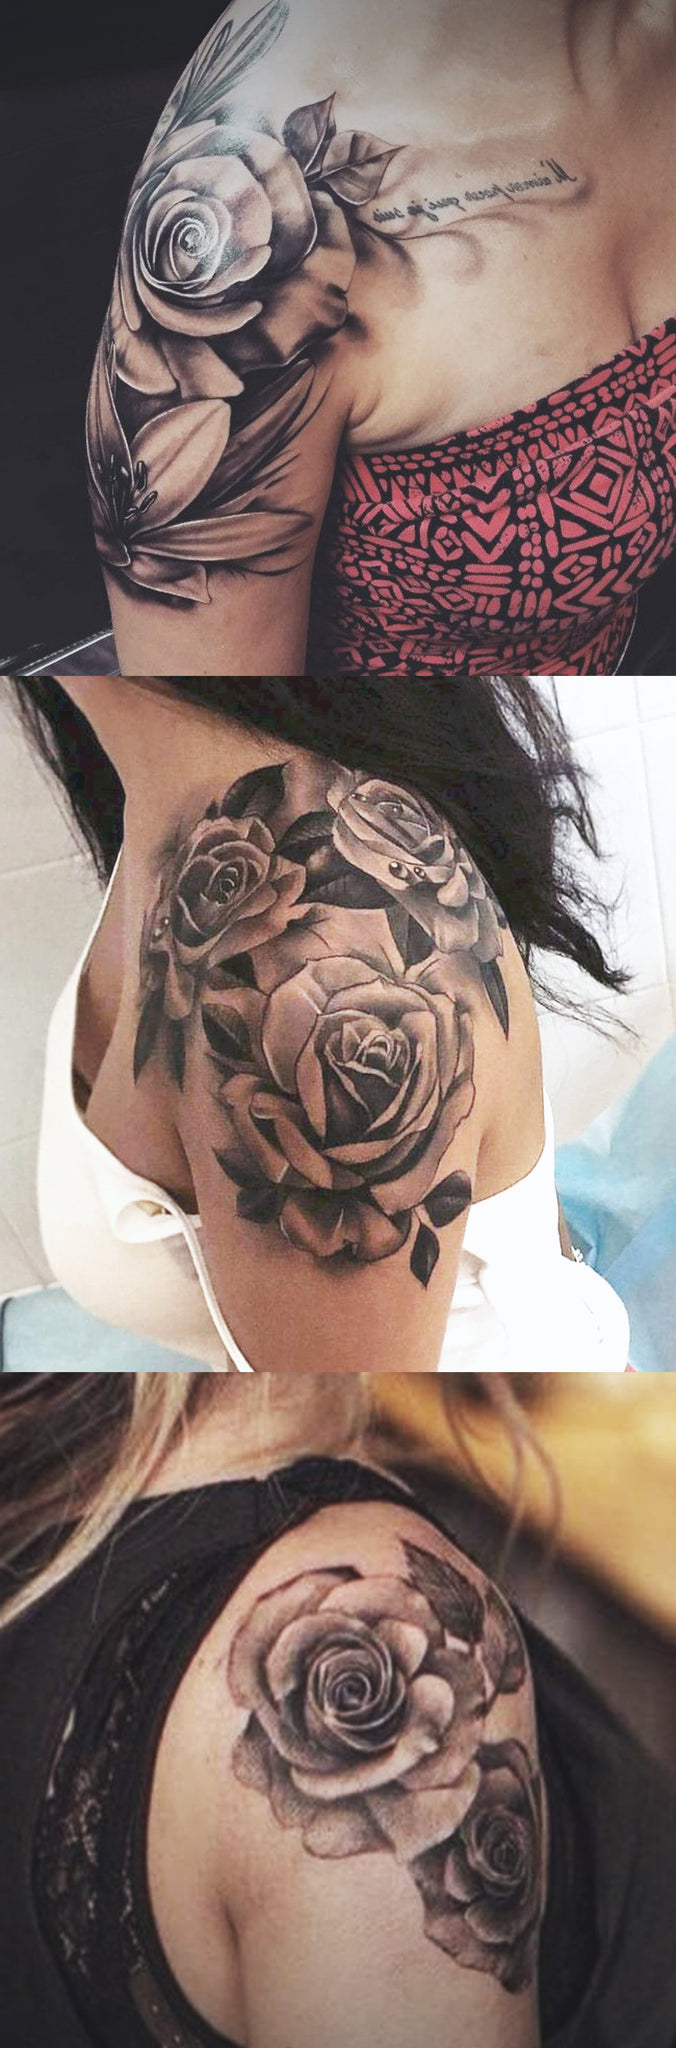 flower tattoo ideas shoulder